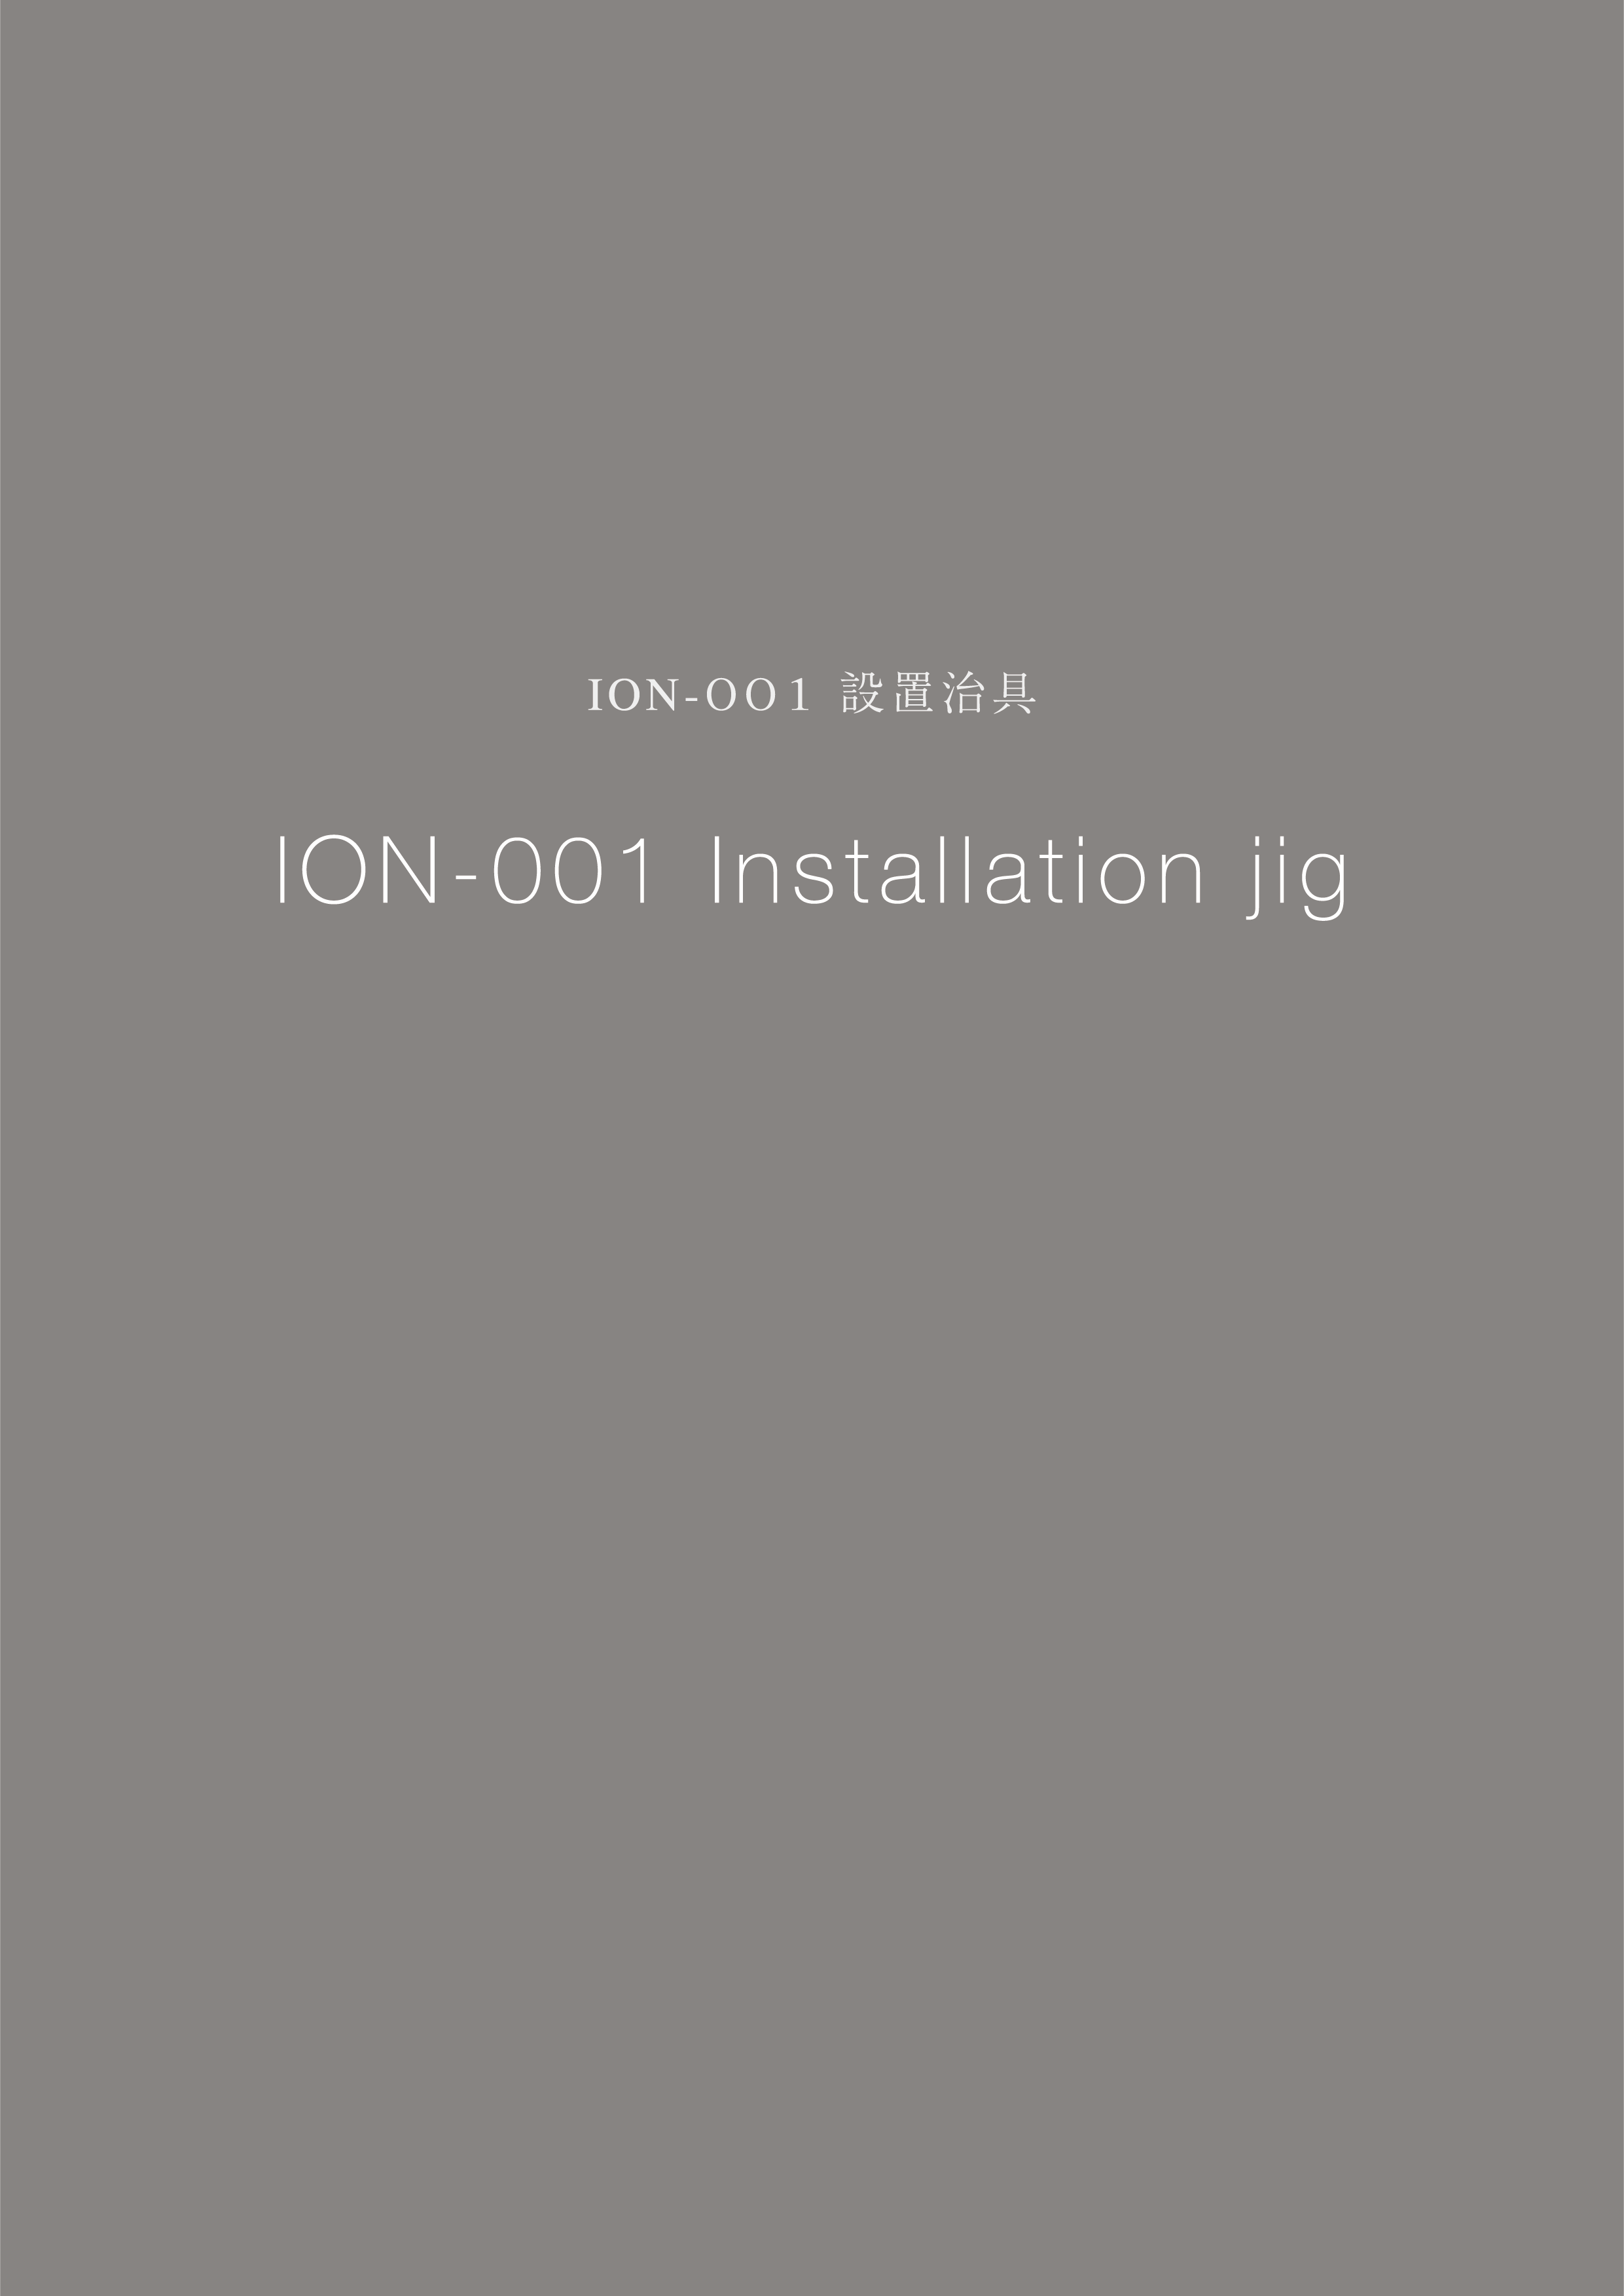 ION-001 installation jig